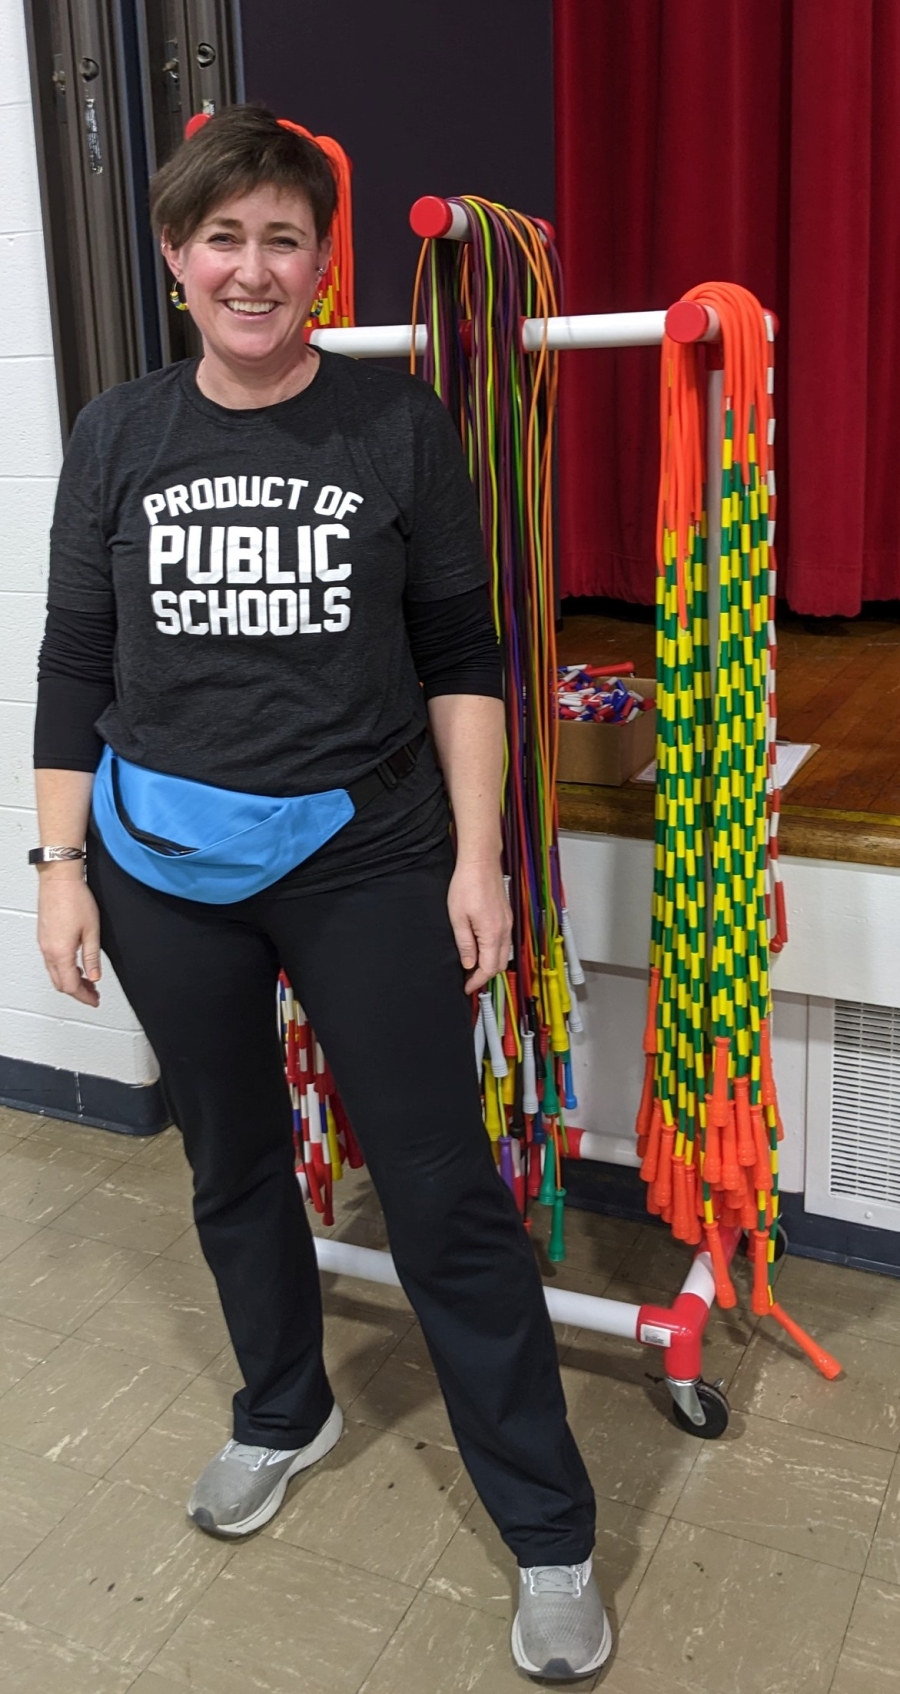 Photo of volunteer in Product of Public Schools t-shirt